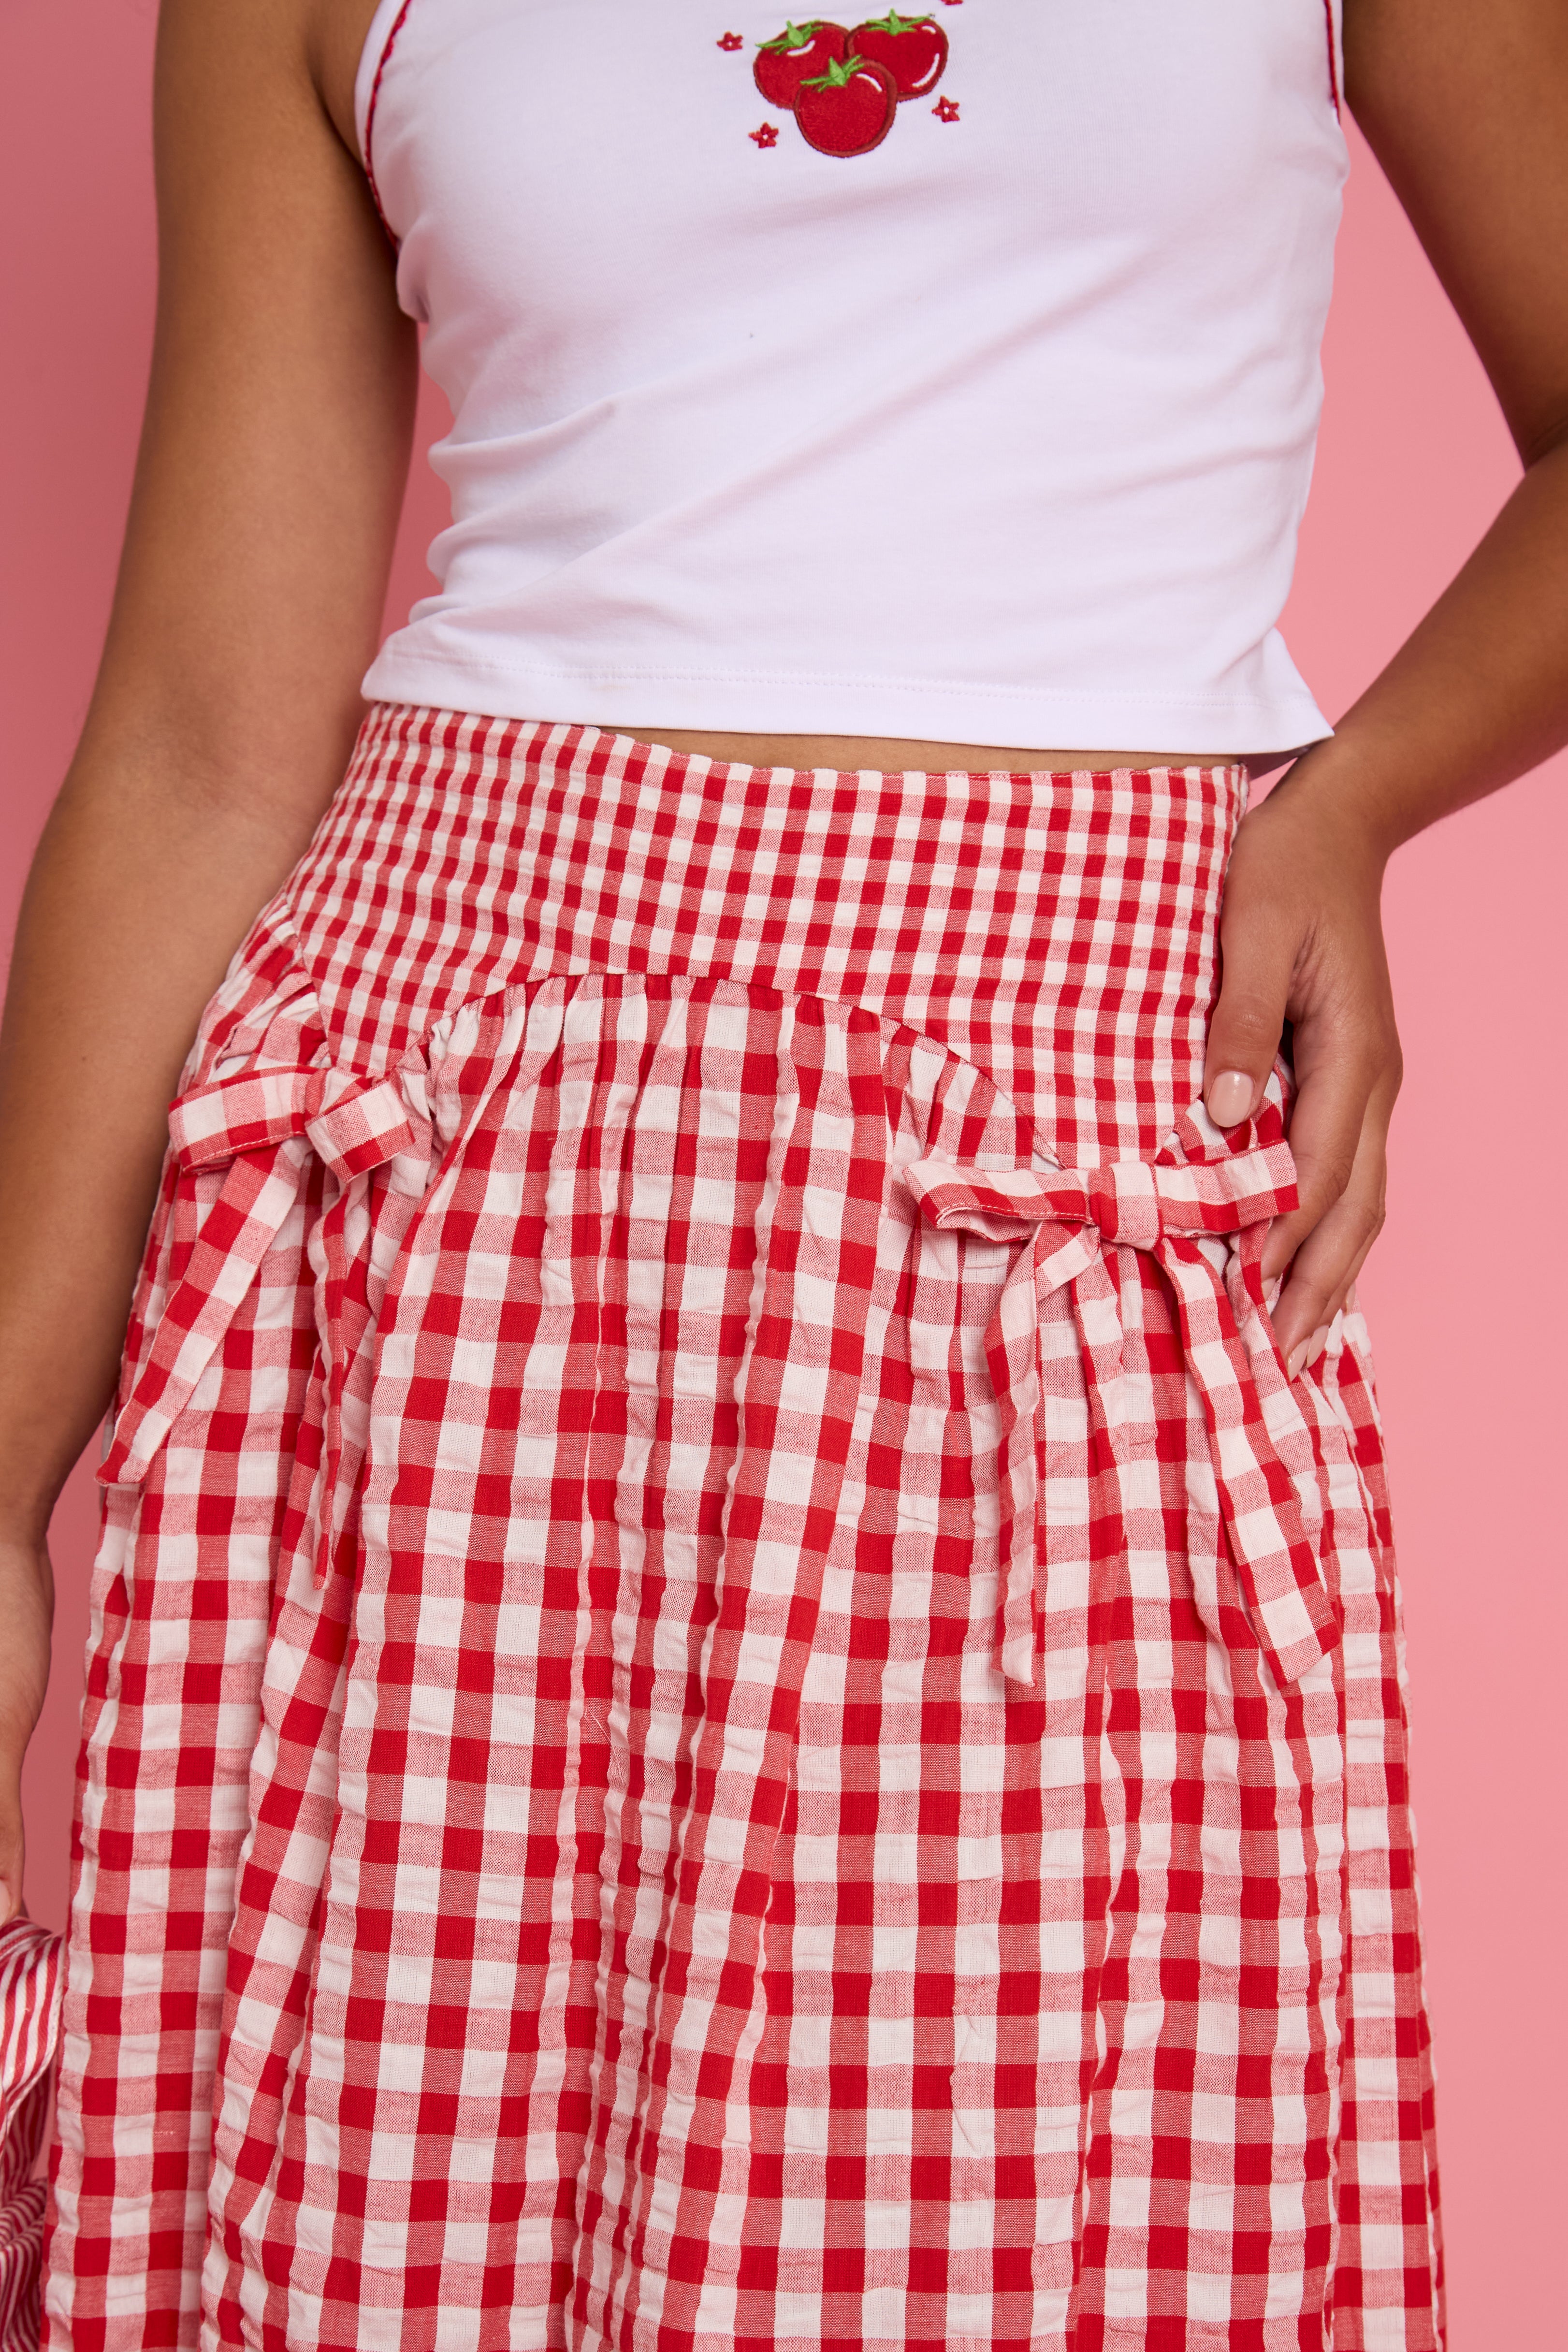 Sydney Bow Gingham Midaxi Skirt